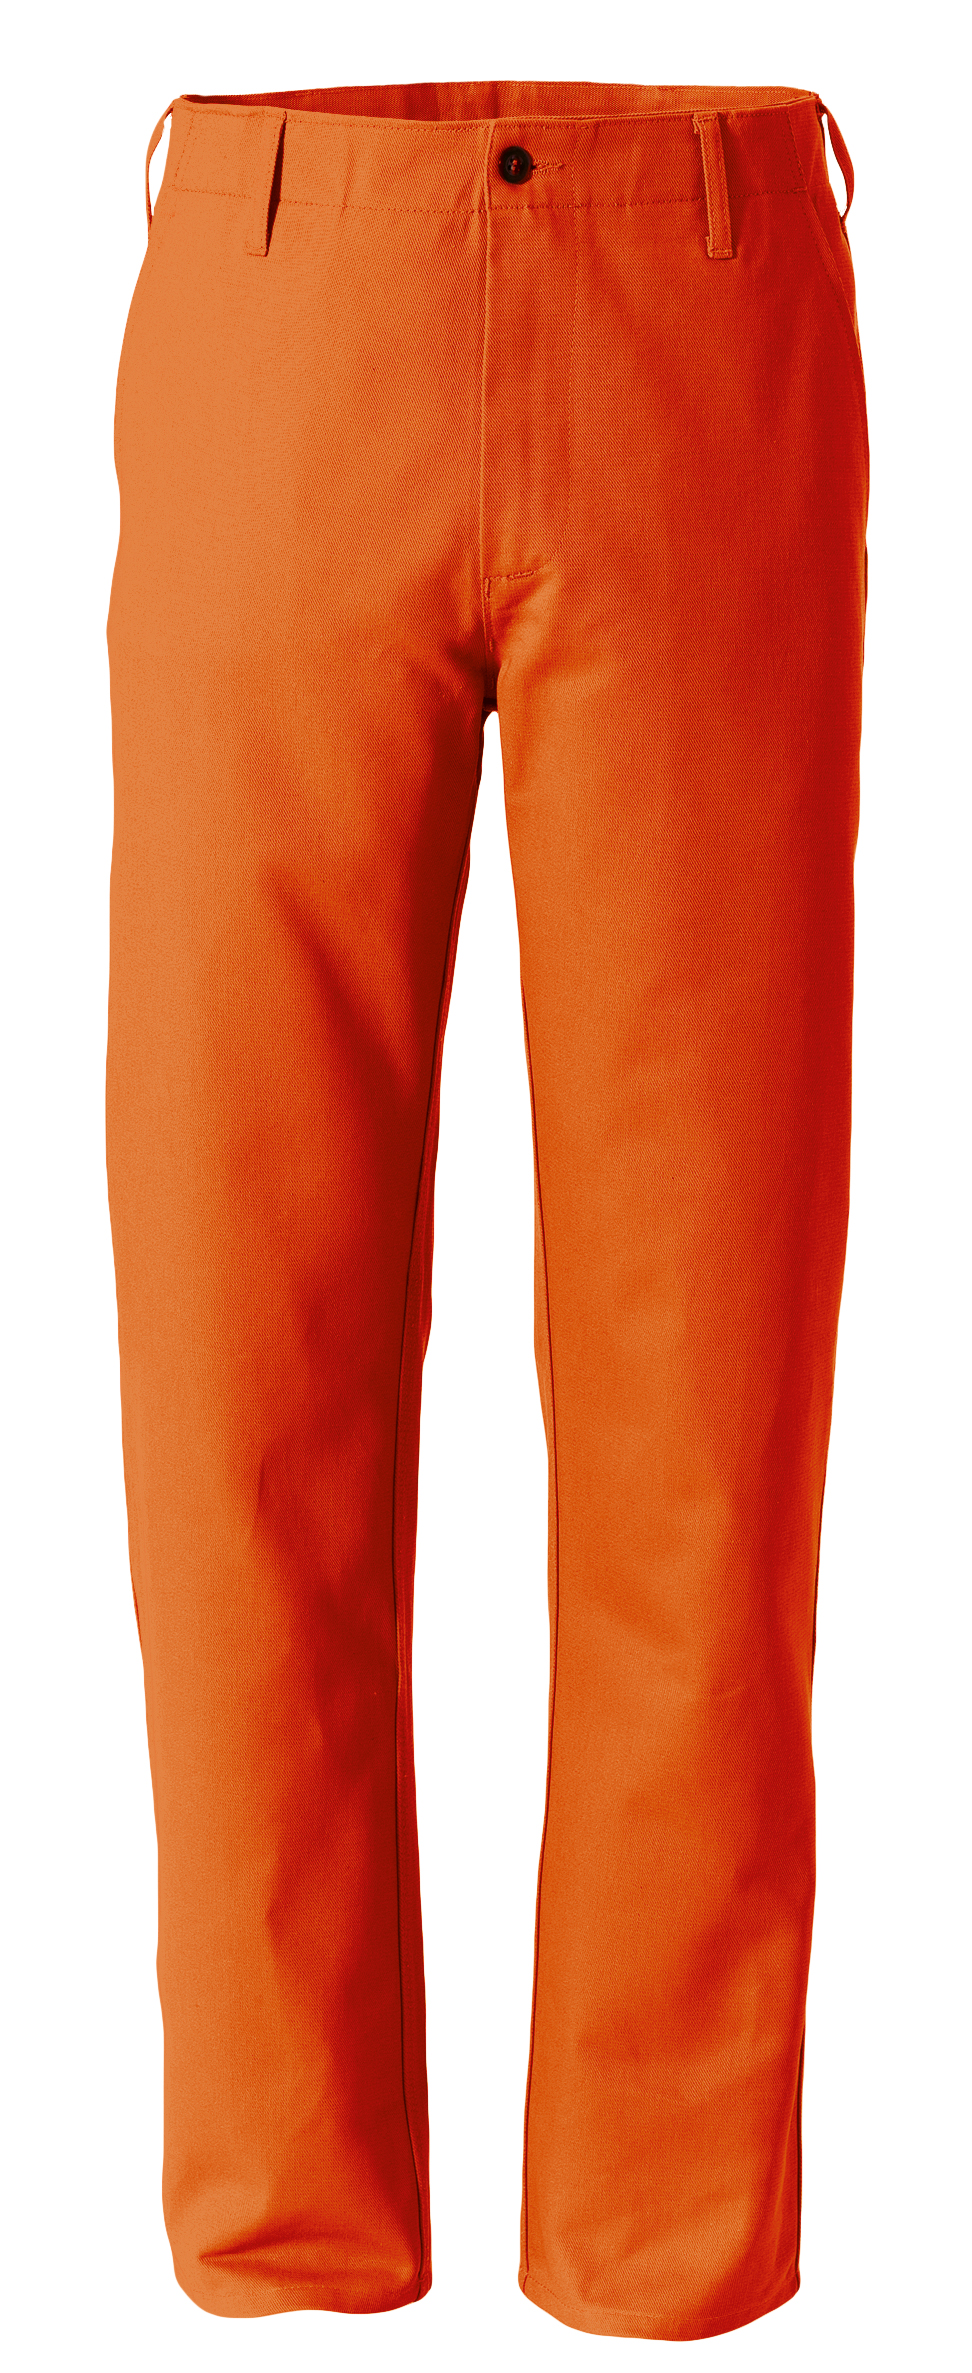 ROFA Bundhose Arbeitshose Berufshose Workerhose Arbeitskleidung Berufskleidung orange ca 360 g